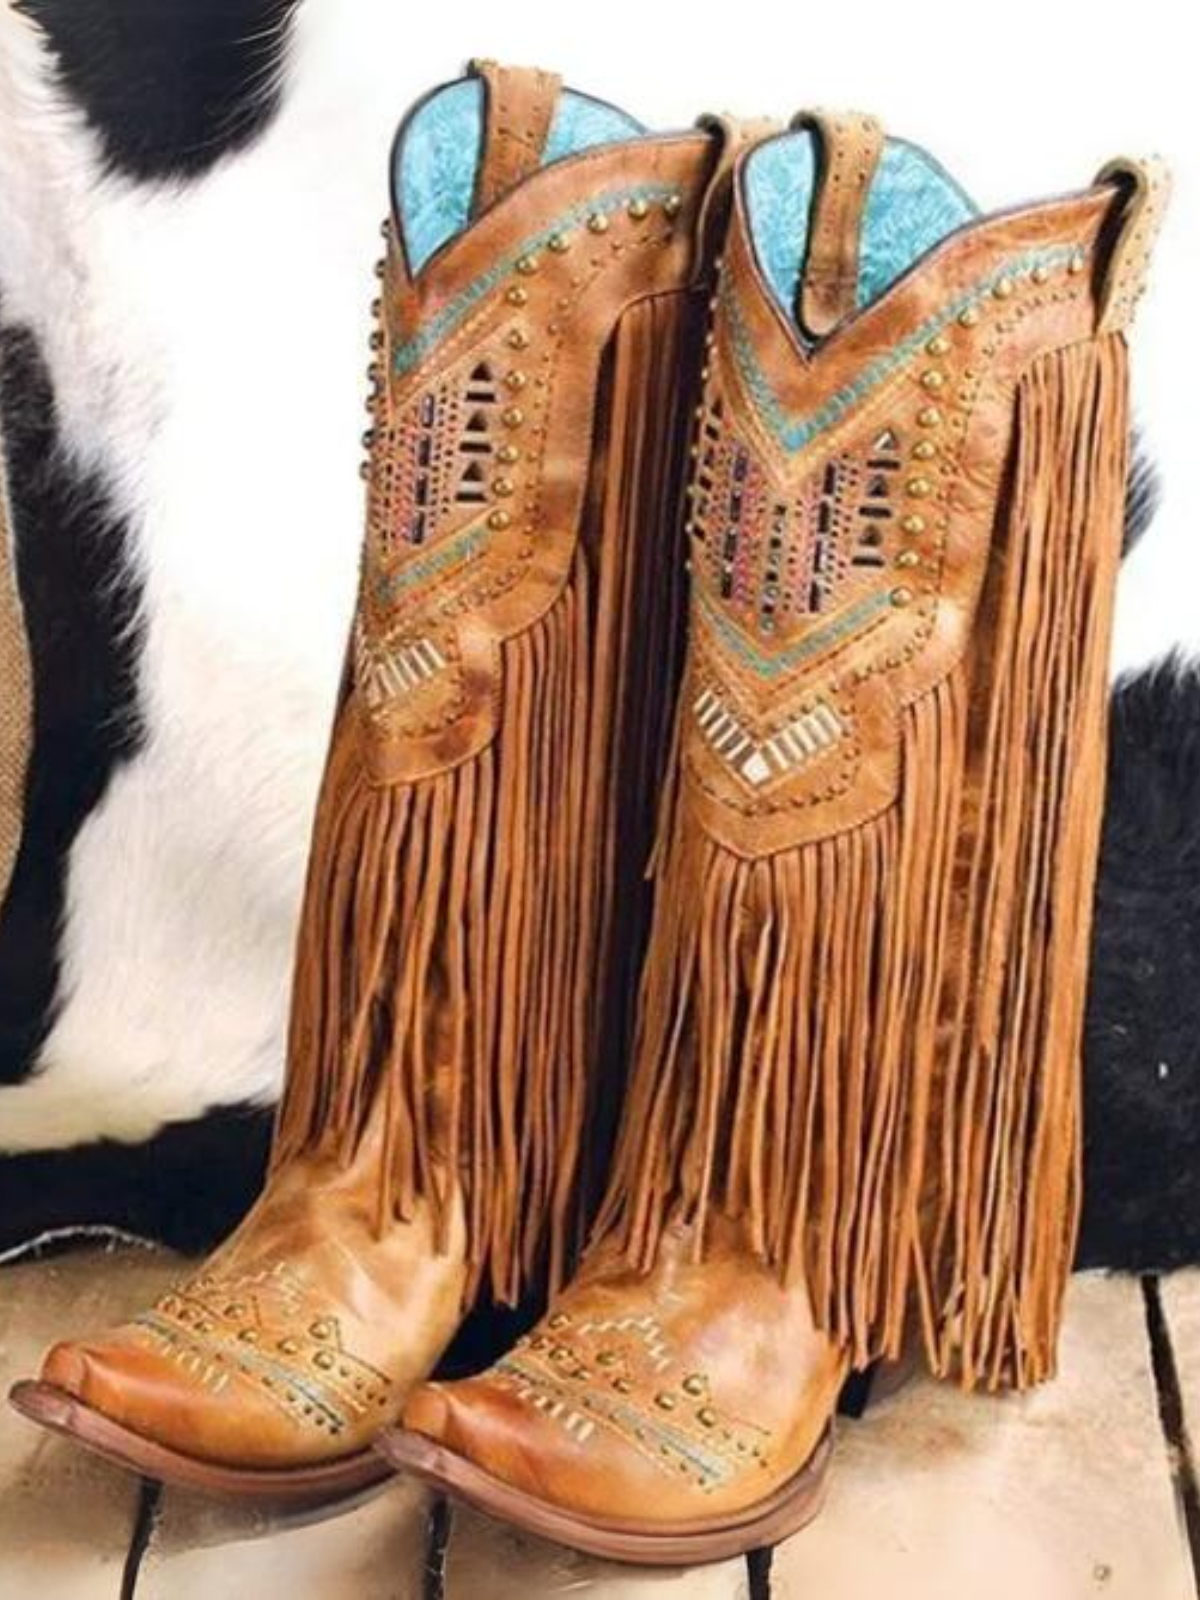 Women's Bohemian Fringe Cowgirl Boots